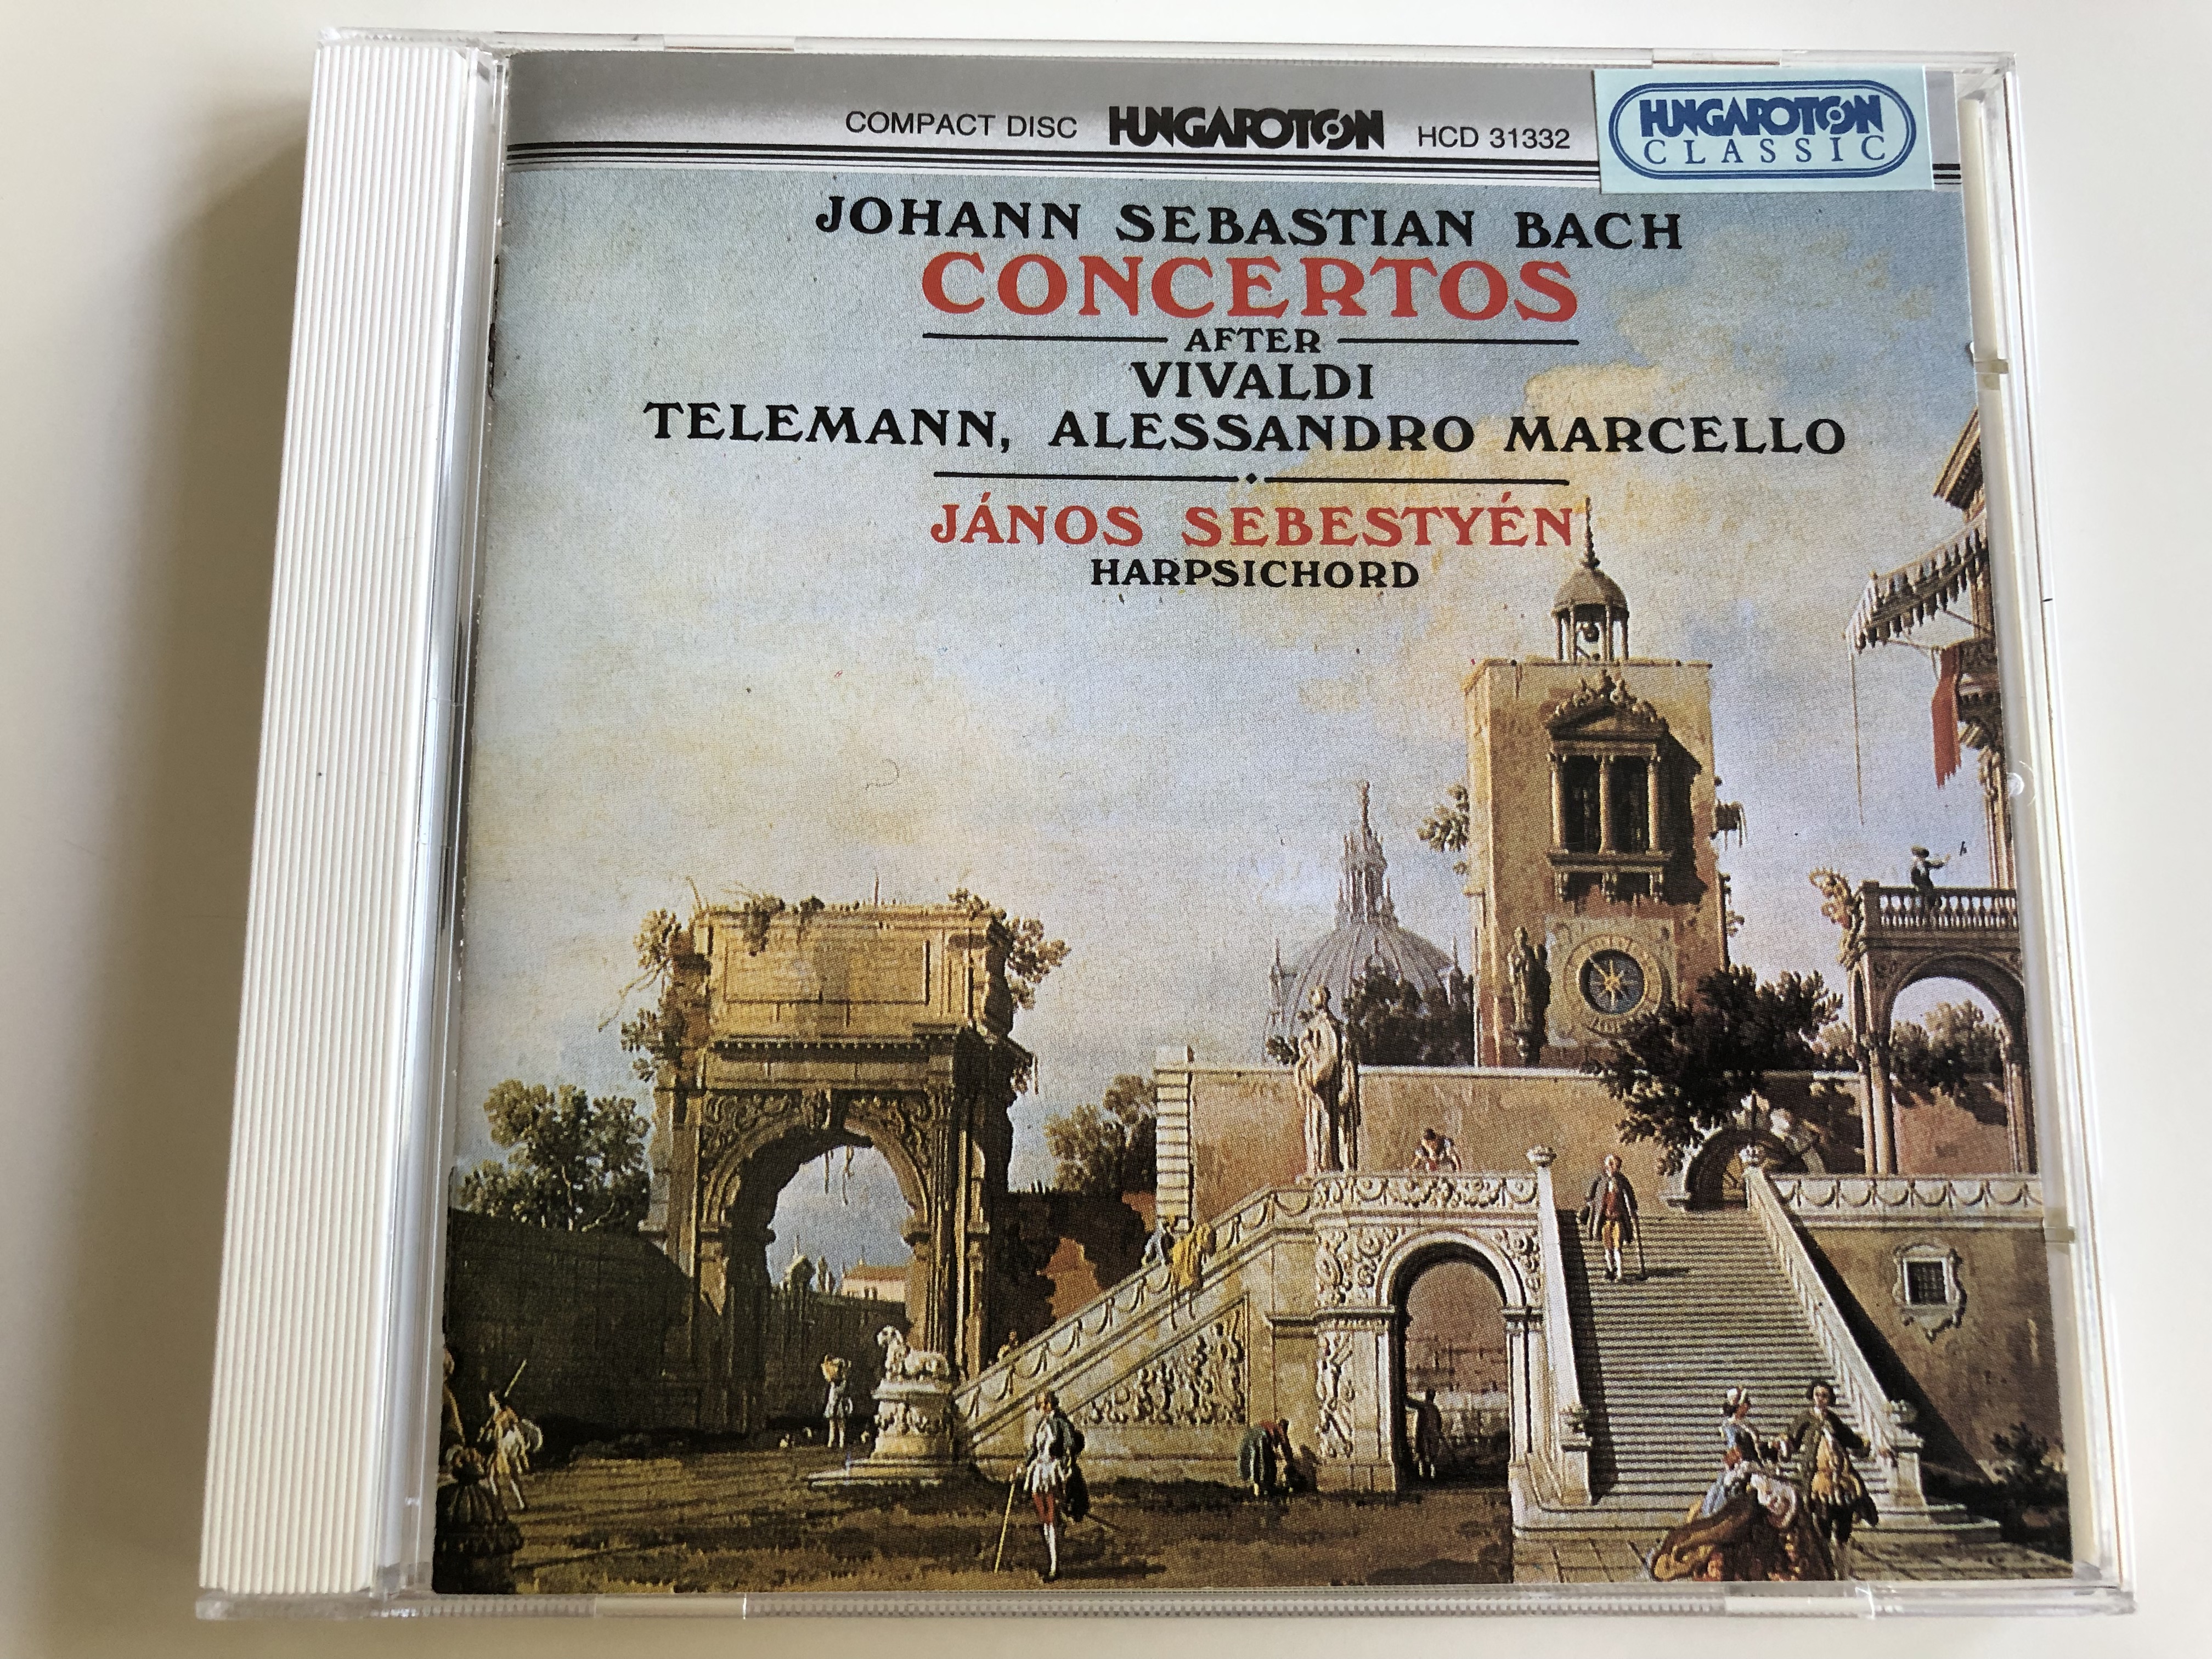 johann-sebastian-bach-concertos-after-vivaldi-telemann-alessandro-marcello-j-nos-sebesty-n-harpsichord-hungaroton-classic-audio-cd-1990-hcd-31332-1-.jpg